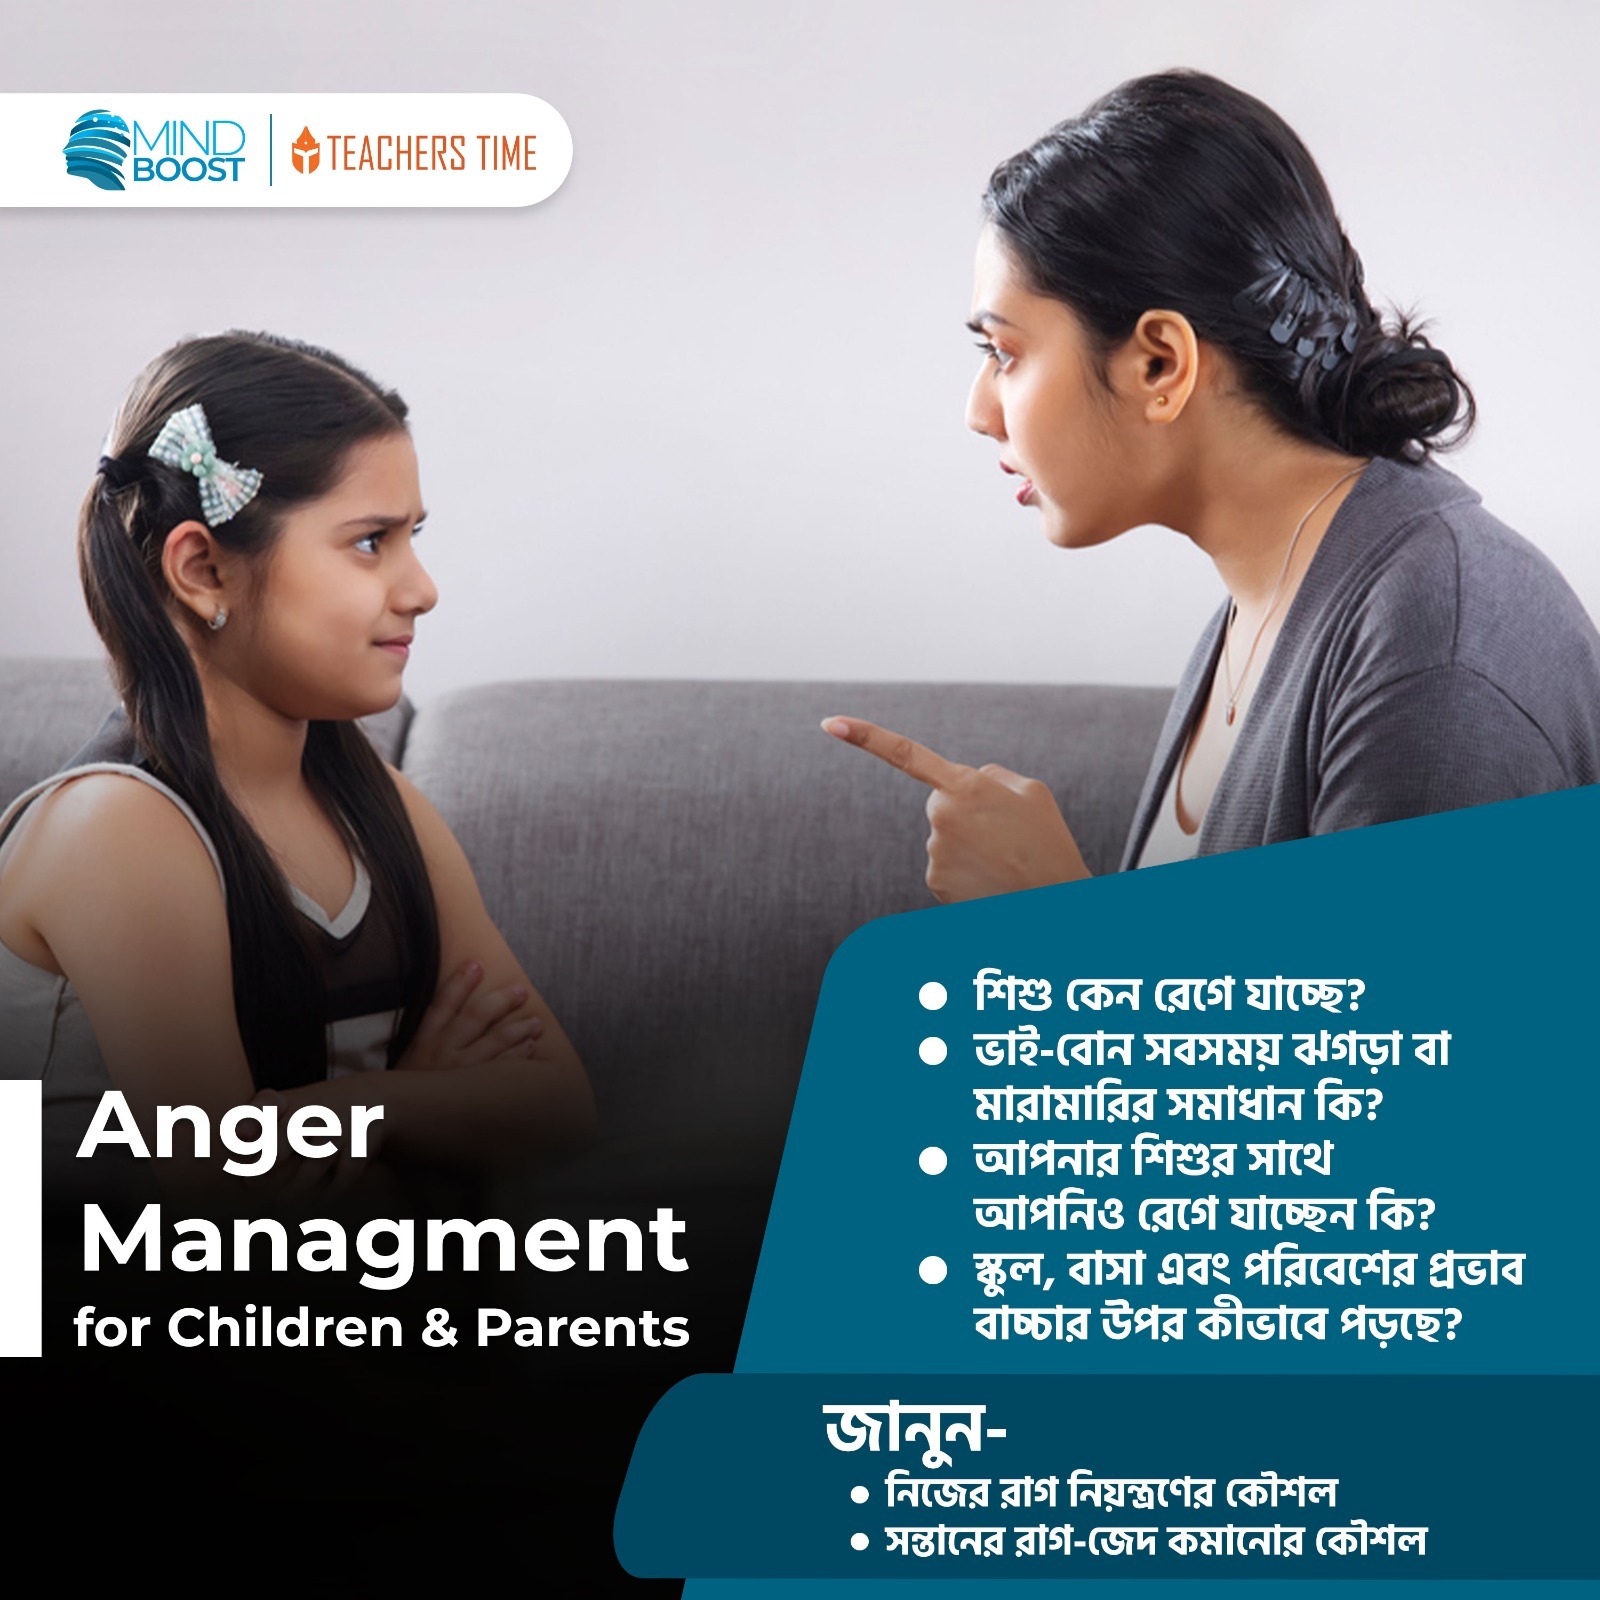 Teachers Time - Anger Management